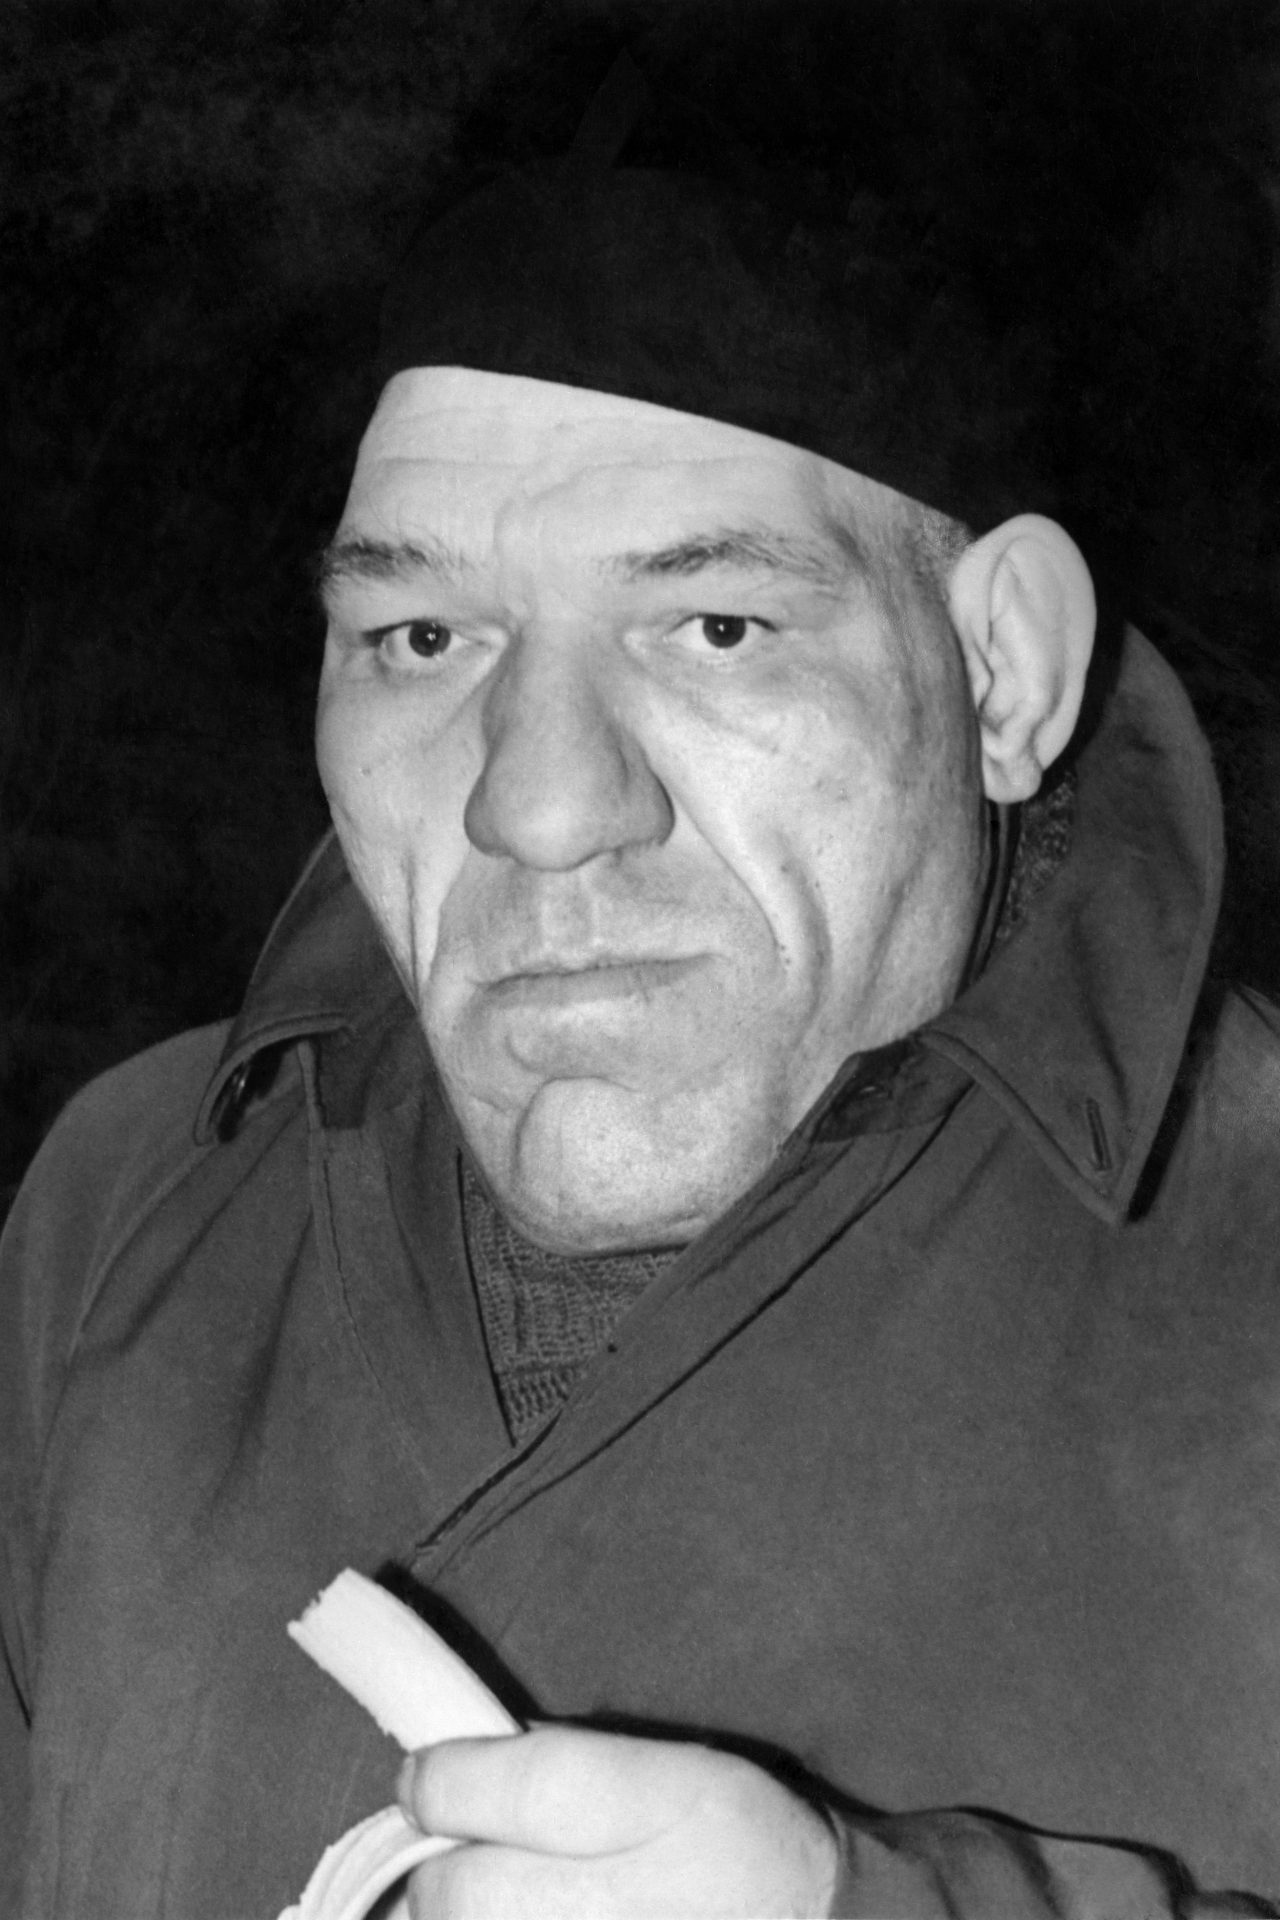 Maurice Tillet: The world champion wrestler and the inspiration behind Shrek